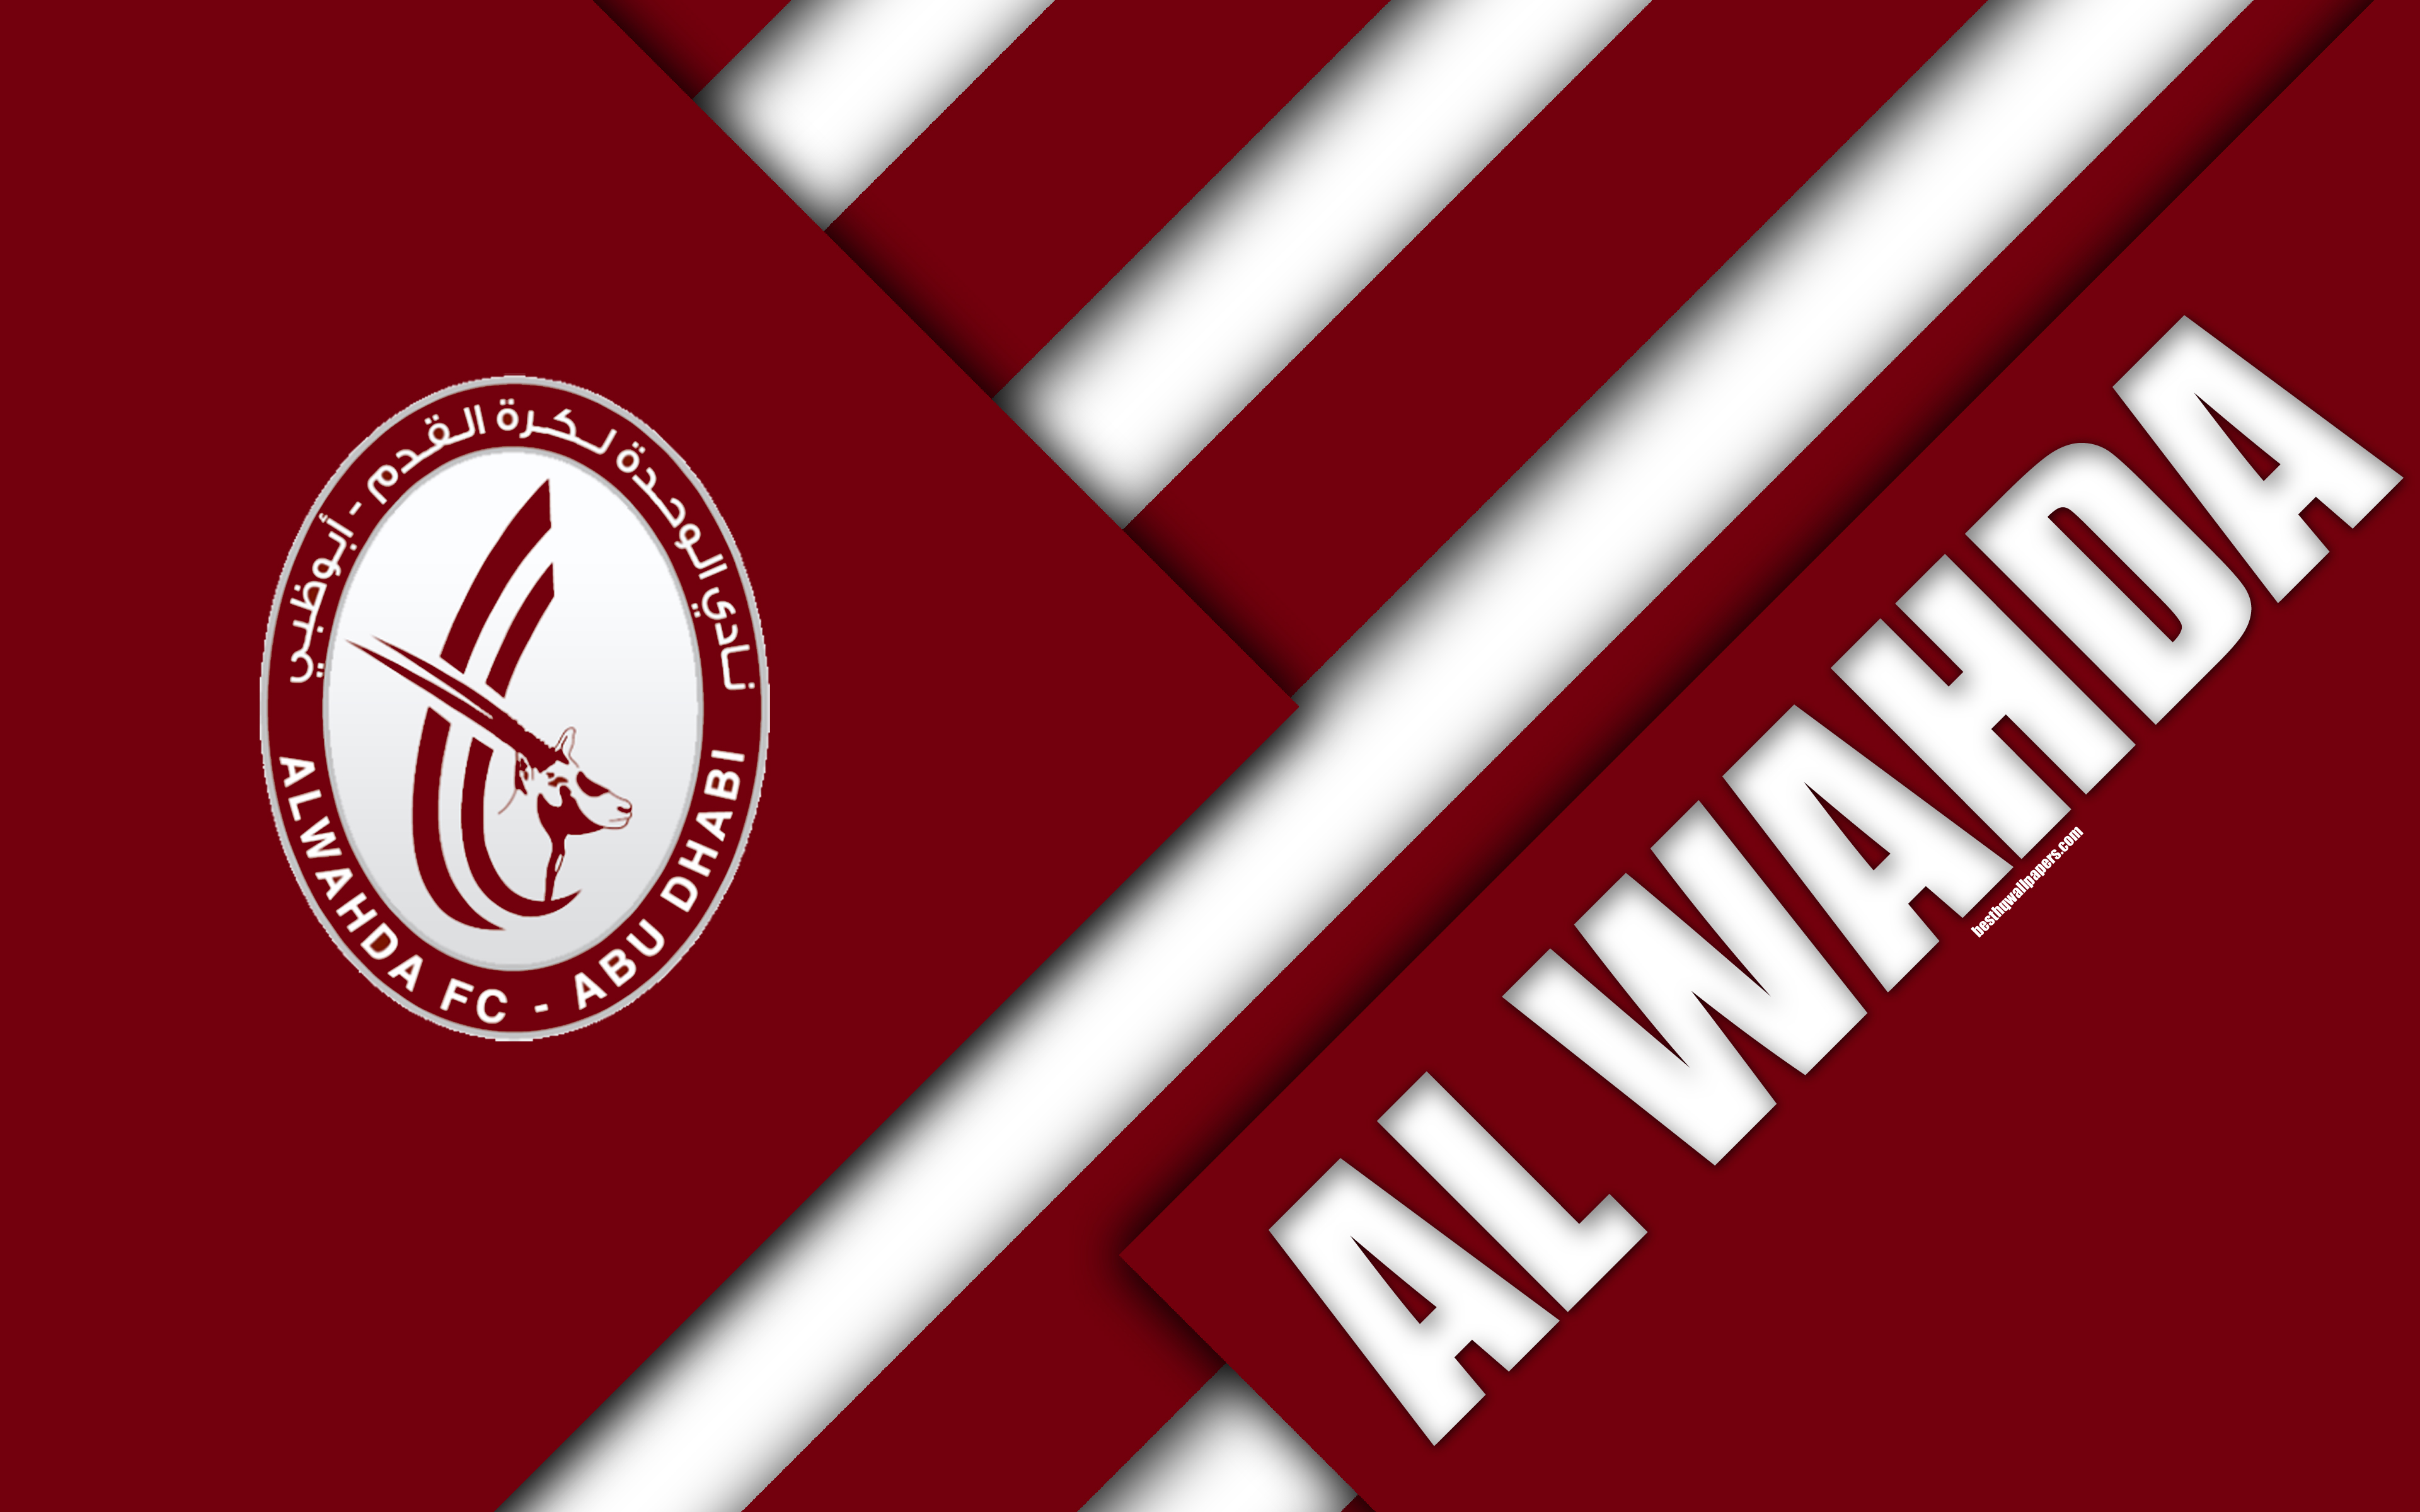 Download wallpaper Al Wahda FC, emirate football club, 4k, material